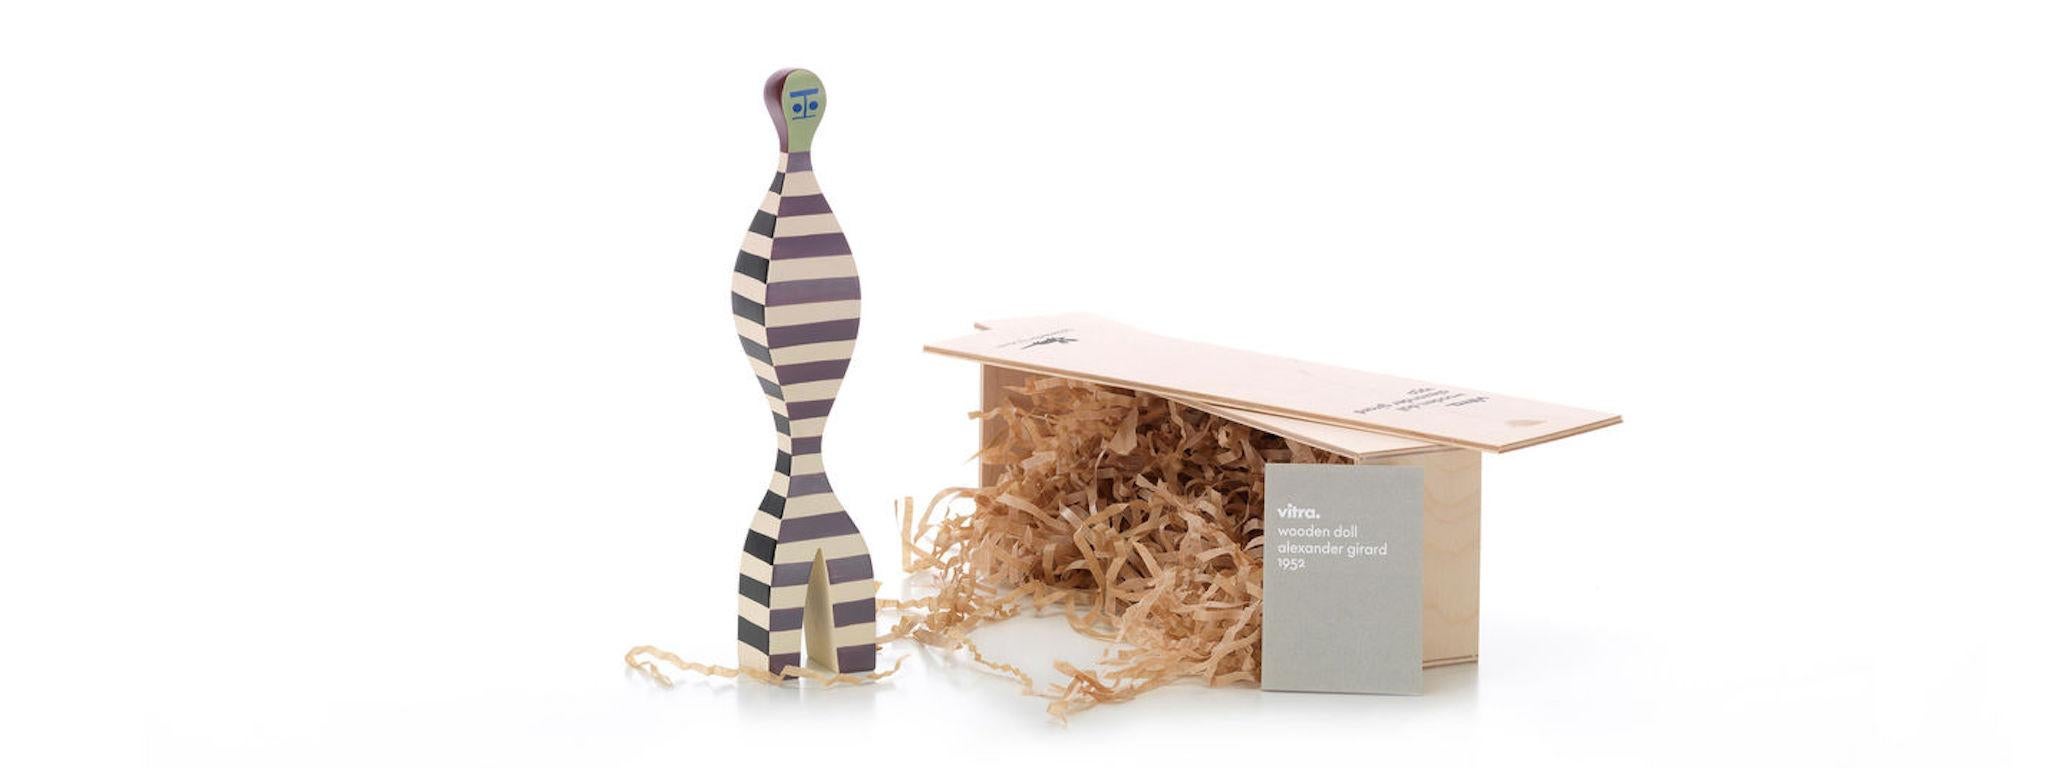 Vitra Wooden Doll No. 16 by Alexander Girard (Moderne) im Angebot